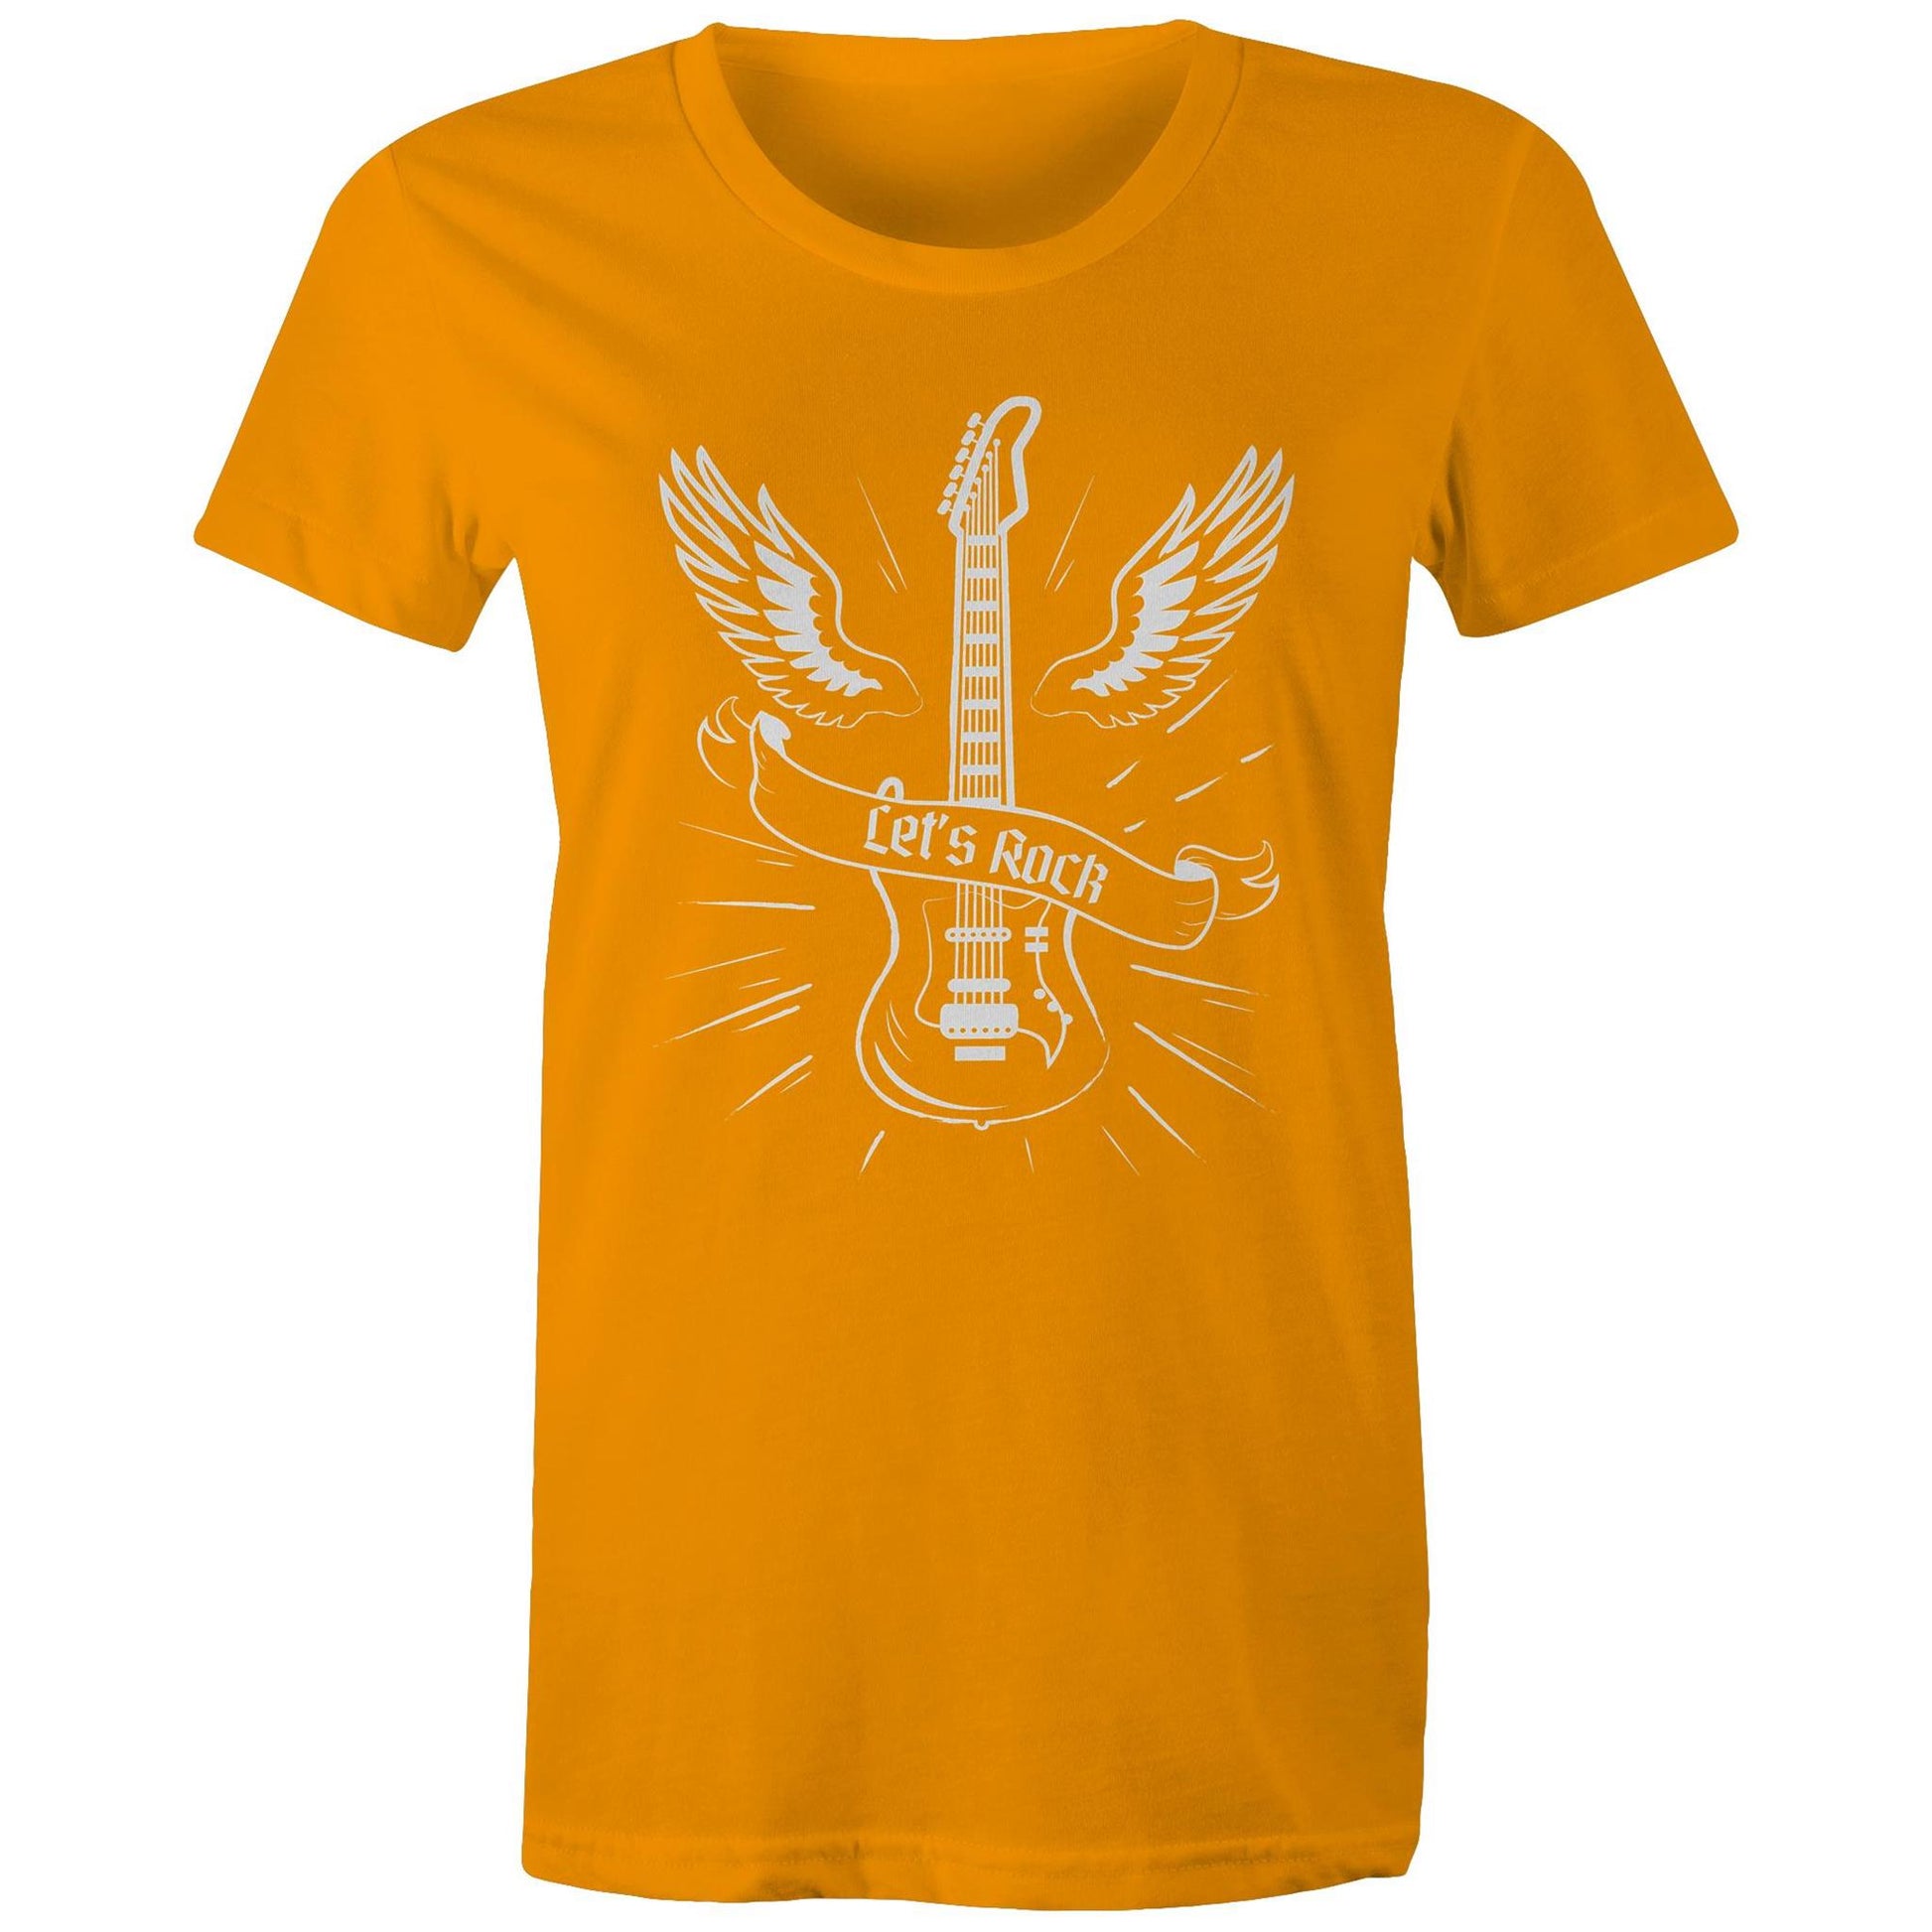 Let's Rock - Womens T-shirt Orange Womens T-shirt Music